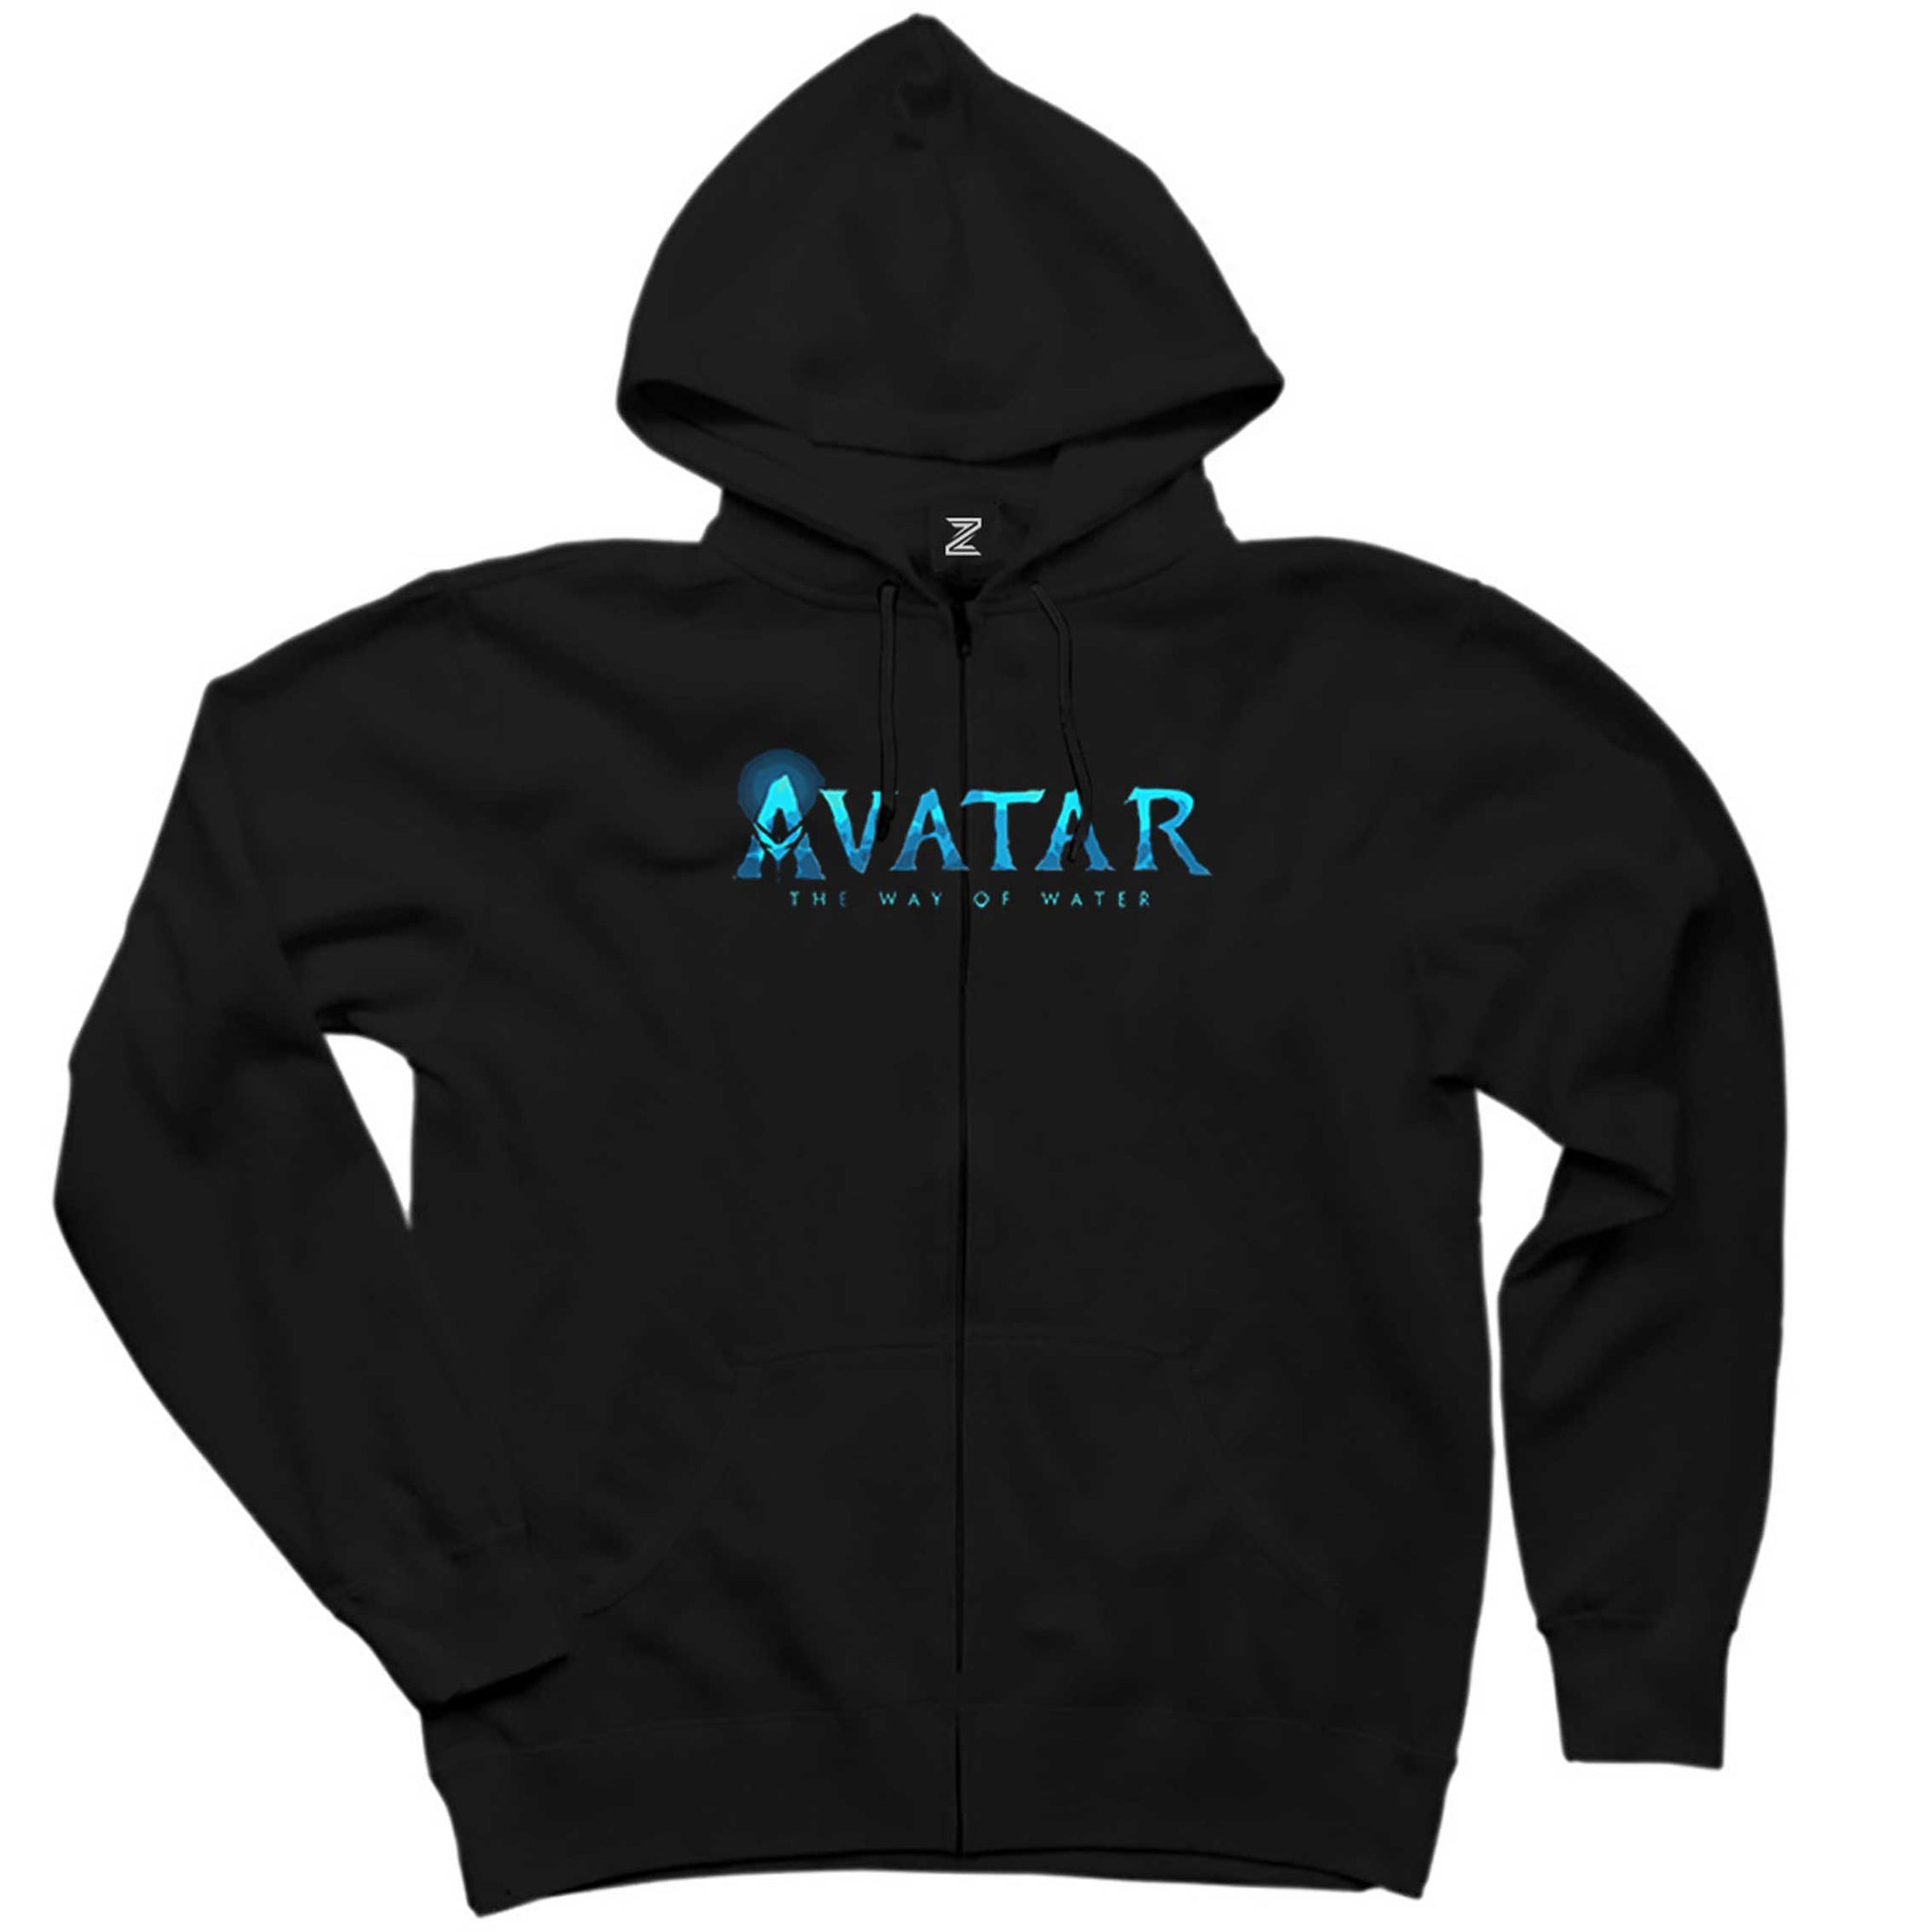 Avatar The Way of Water Siyah Fermuarlı Kapşonlu Sweatshirt